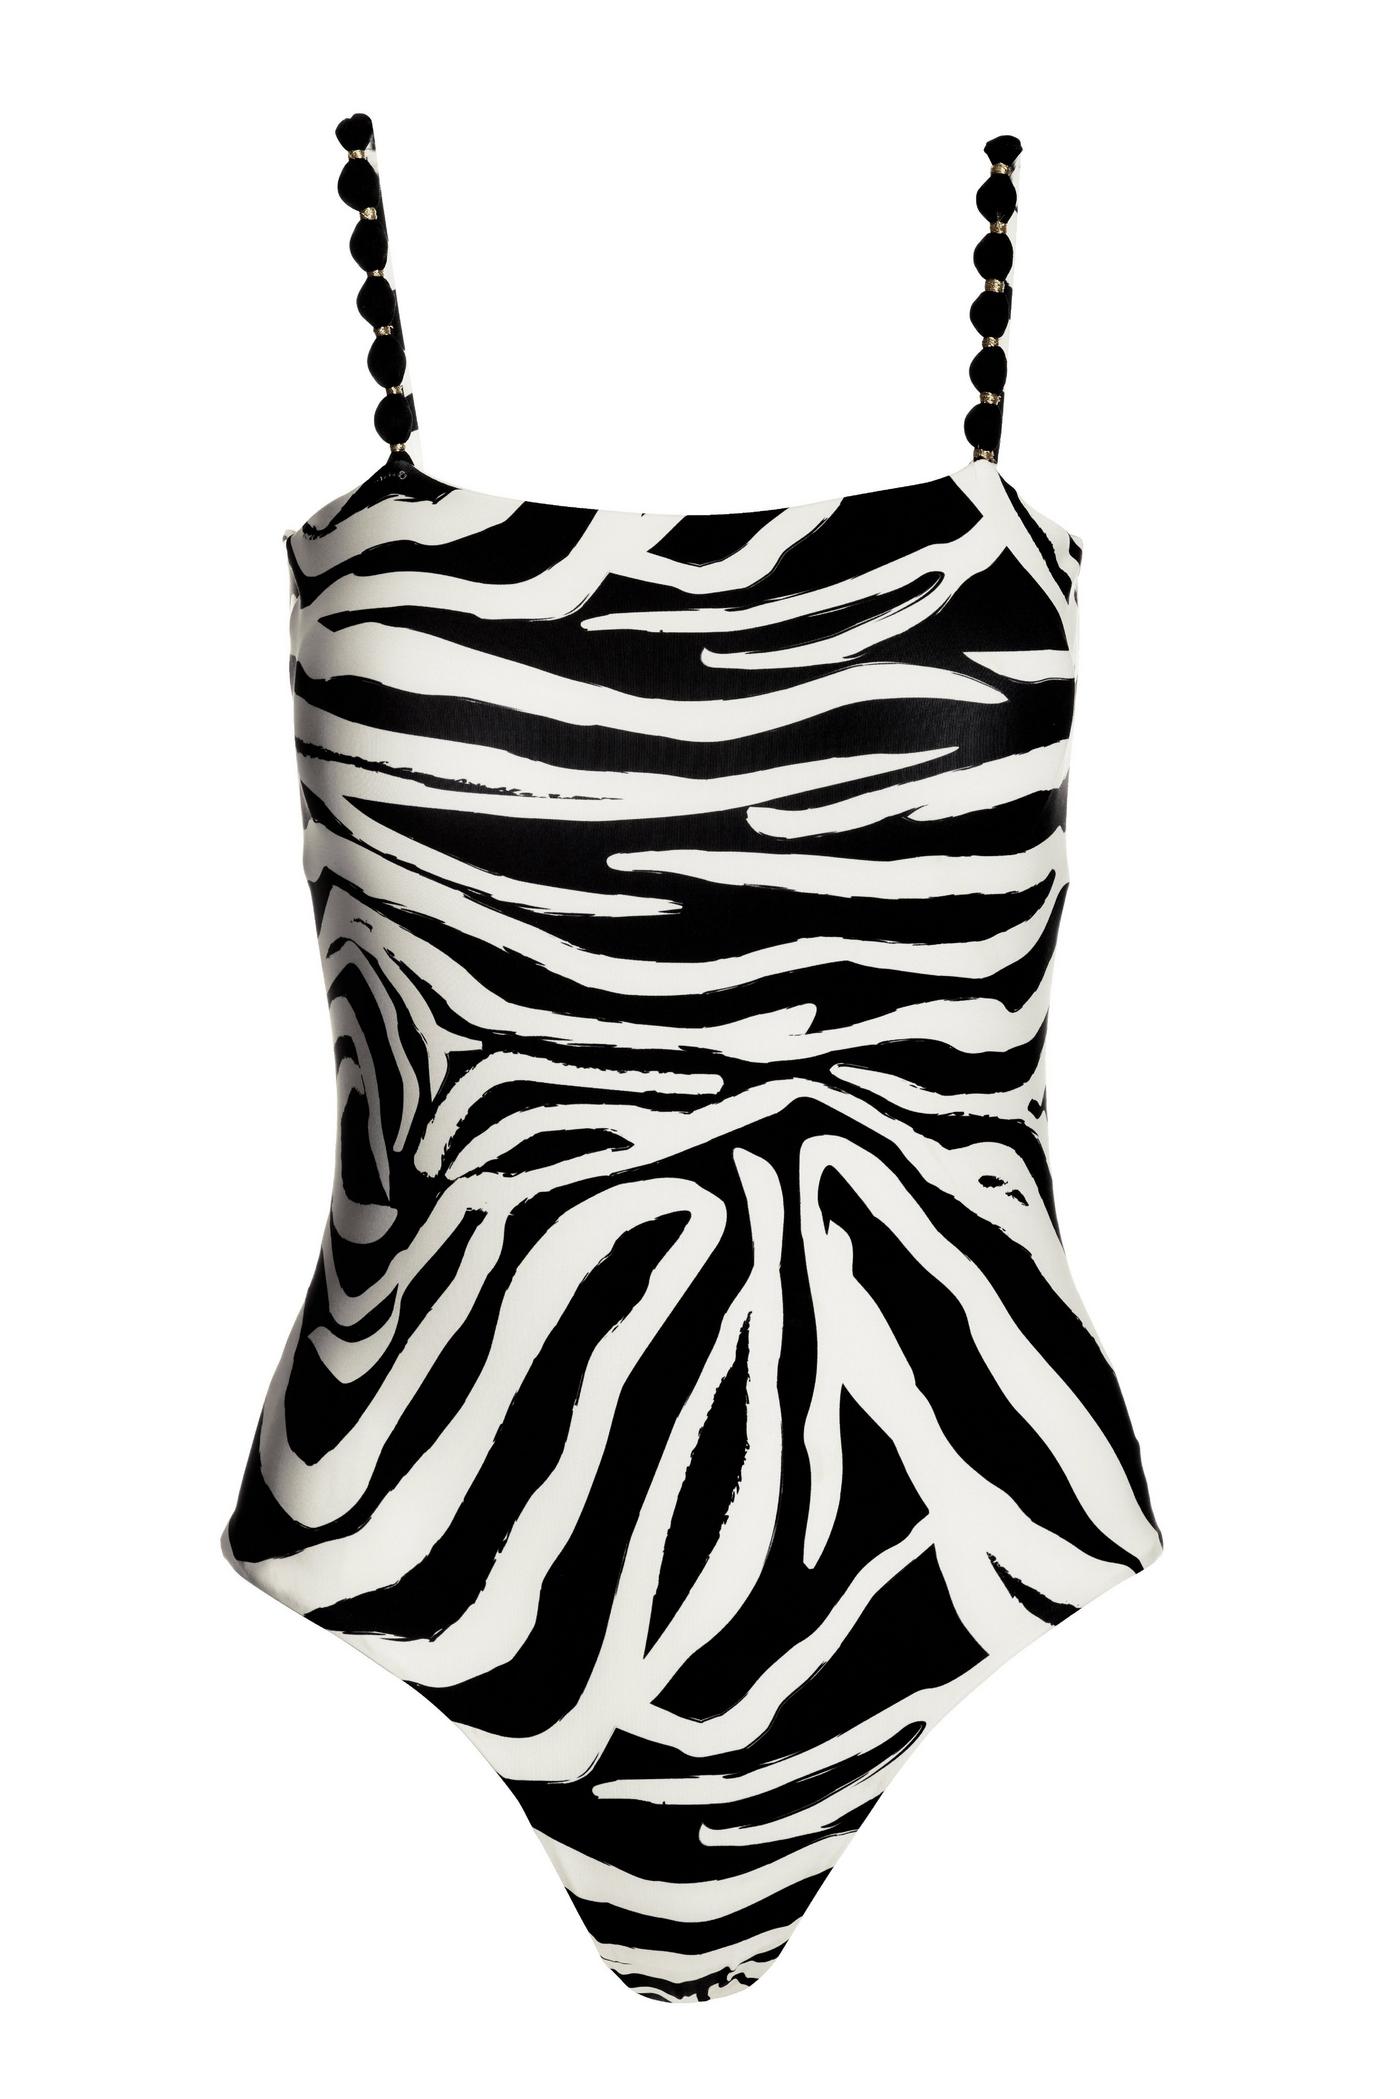 Op Girls 2 Piece Bathing Suit Coral White Black Zebra Print Size 18 Months